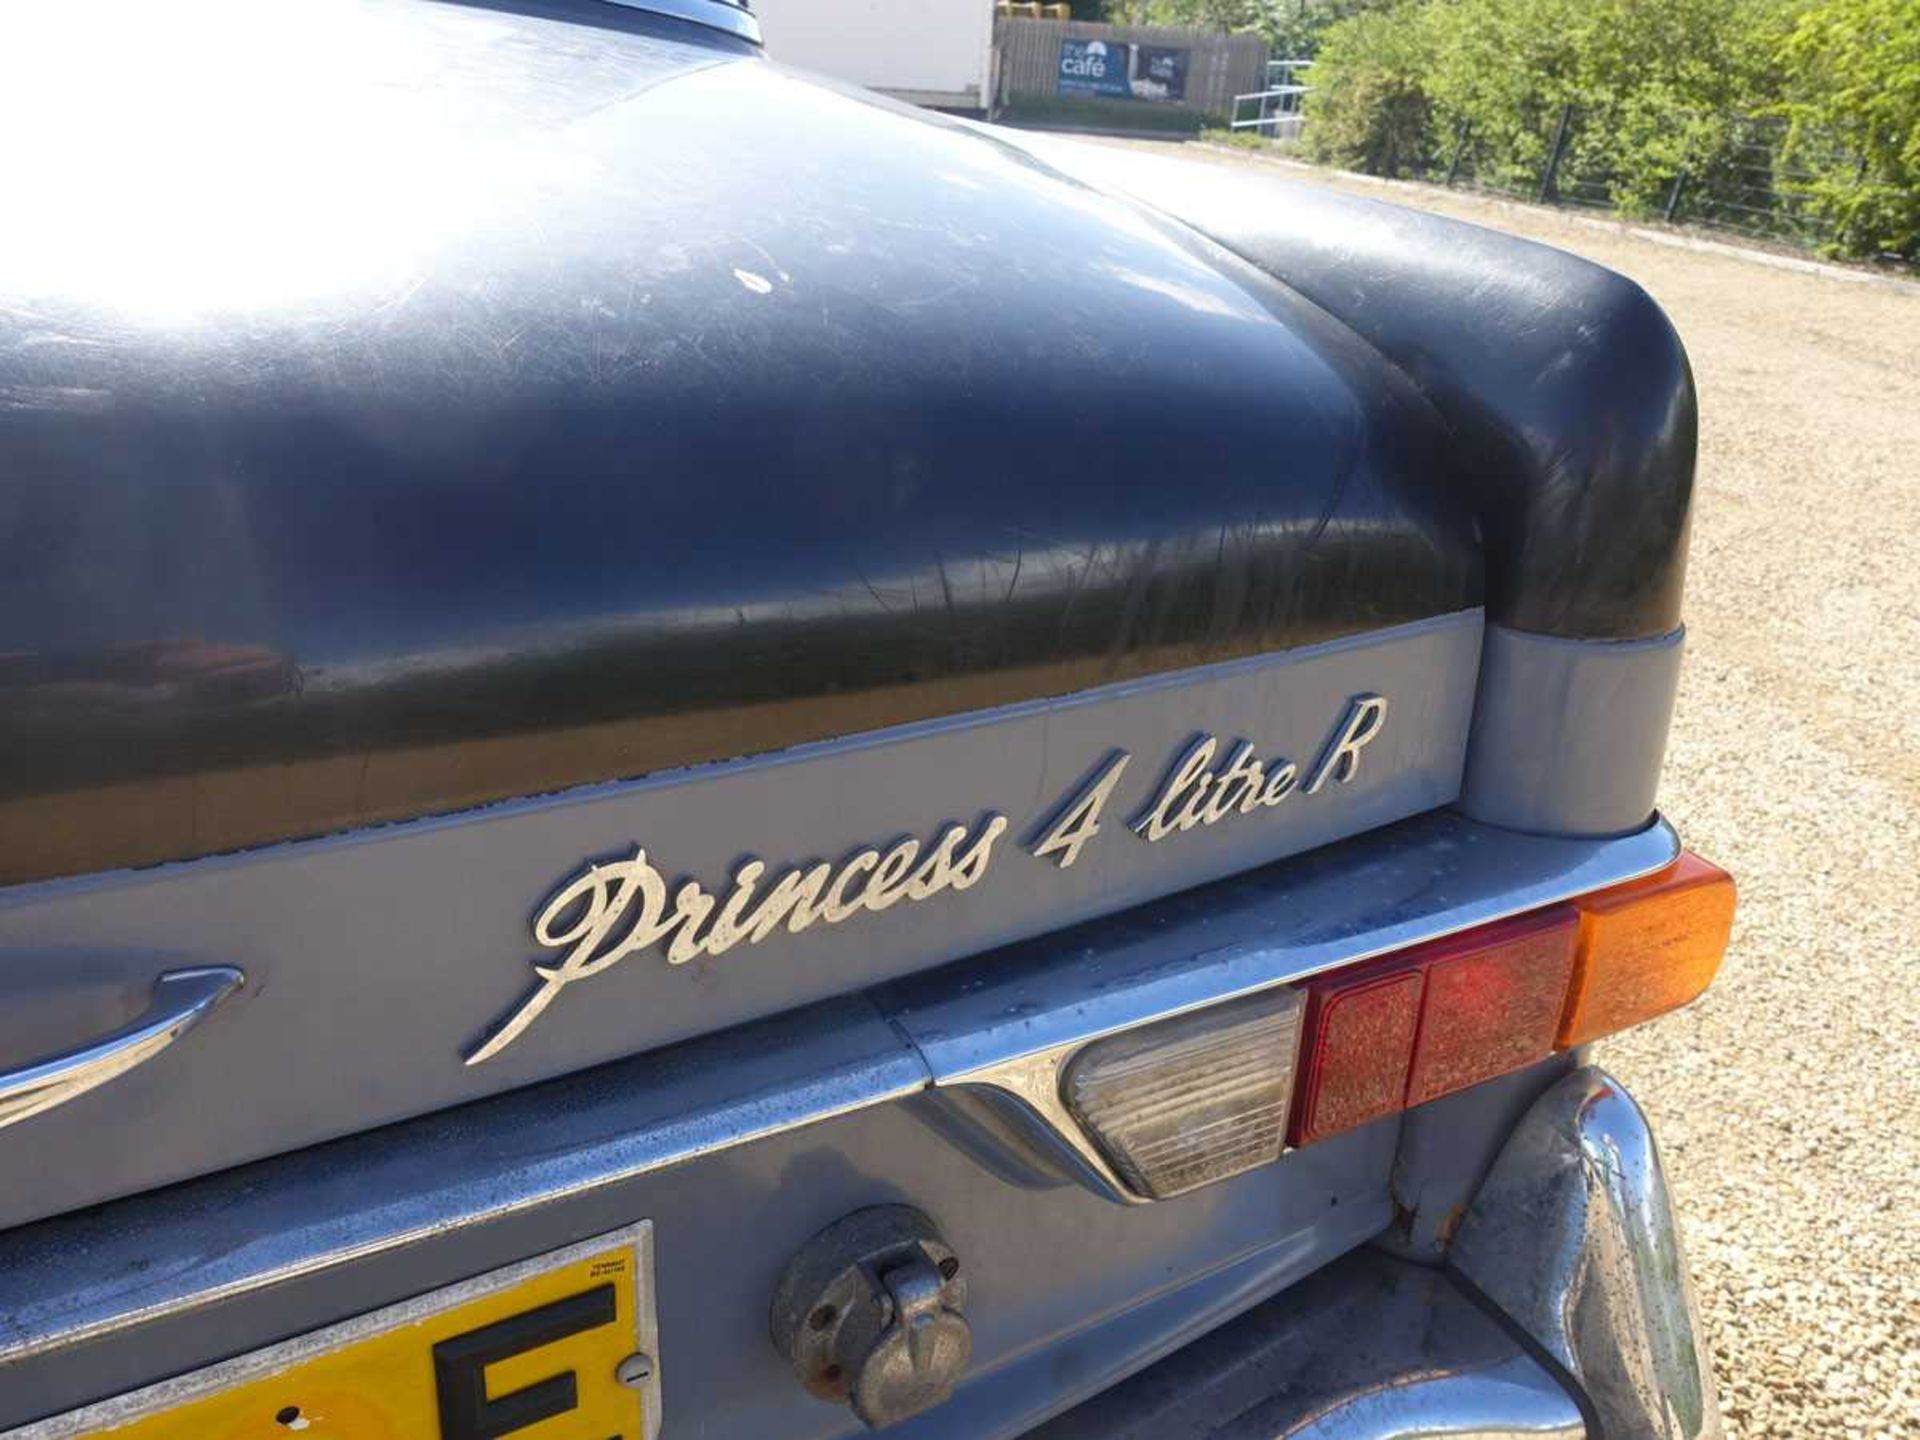 (GBM 342E) 1967 Vanden Plas Princess 4 litre R Saloon in blue/black with Rolls Royce 3909cc petrol - Image 8 of 13